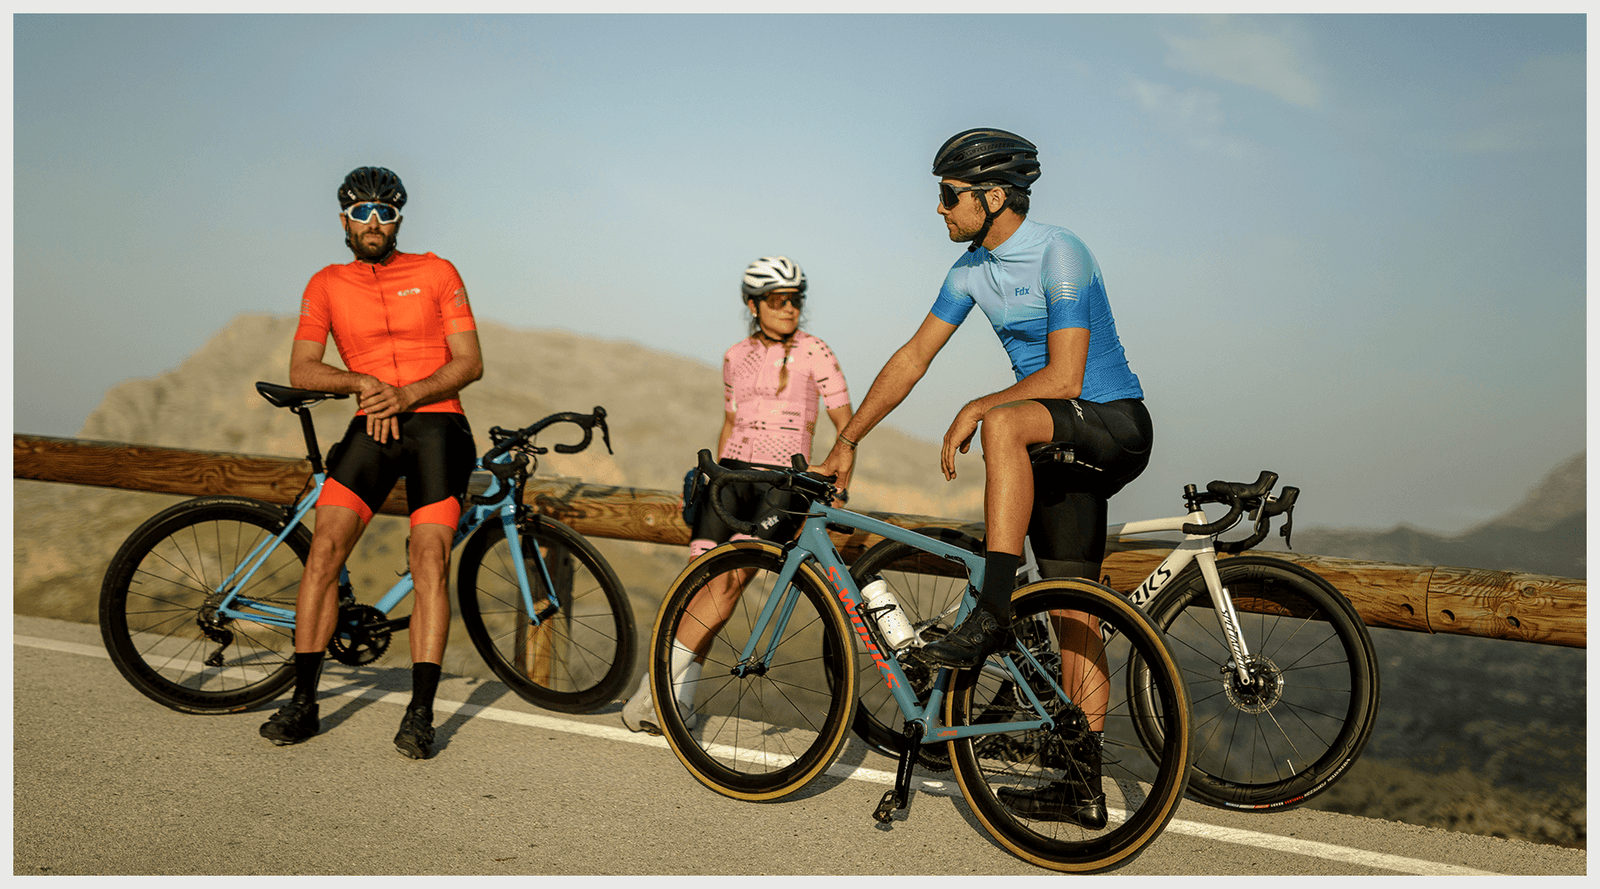 Fdx Men's & Women's Black, Blue, Orange & Pink Short Sleeve Cycling Jersey Summer Breathable Mesh Fleece Fabric, Bib Short Hi Viz Reflectors & Pockets Cycling Gear Australia